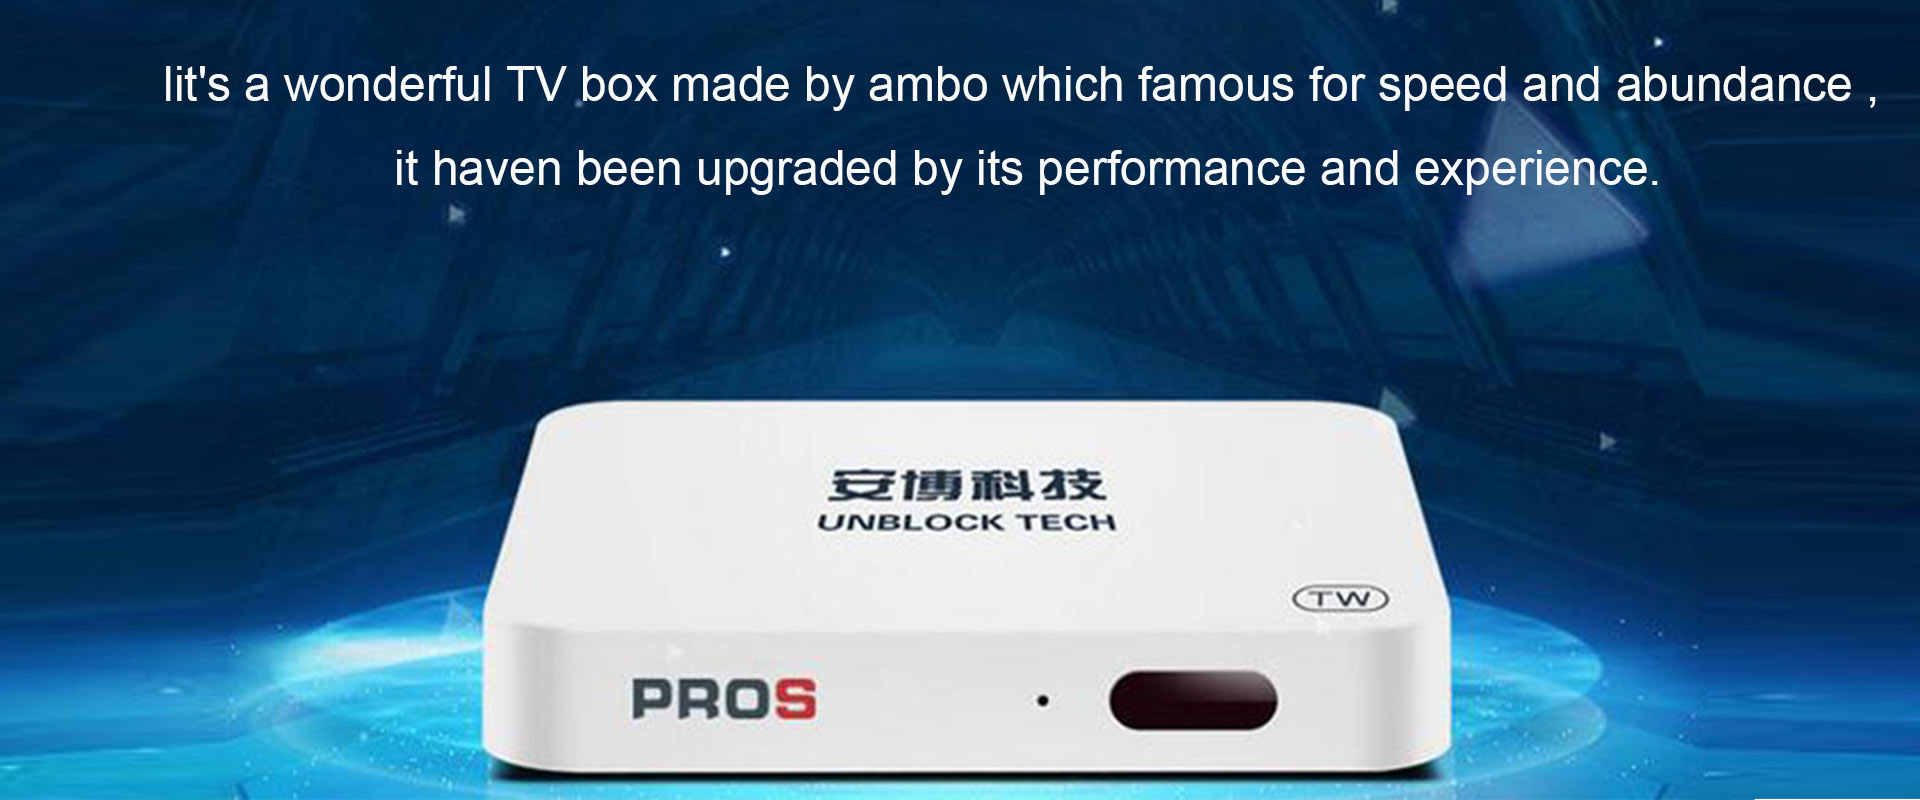 UBOX 7 TV Box - เลิกบล็อก UPROS UBOX Gen 7 Android TV Box 4K